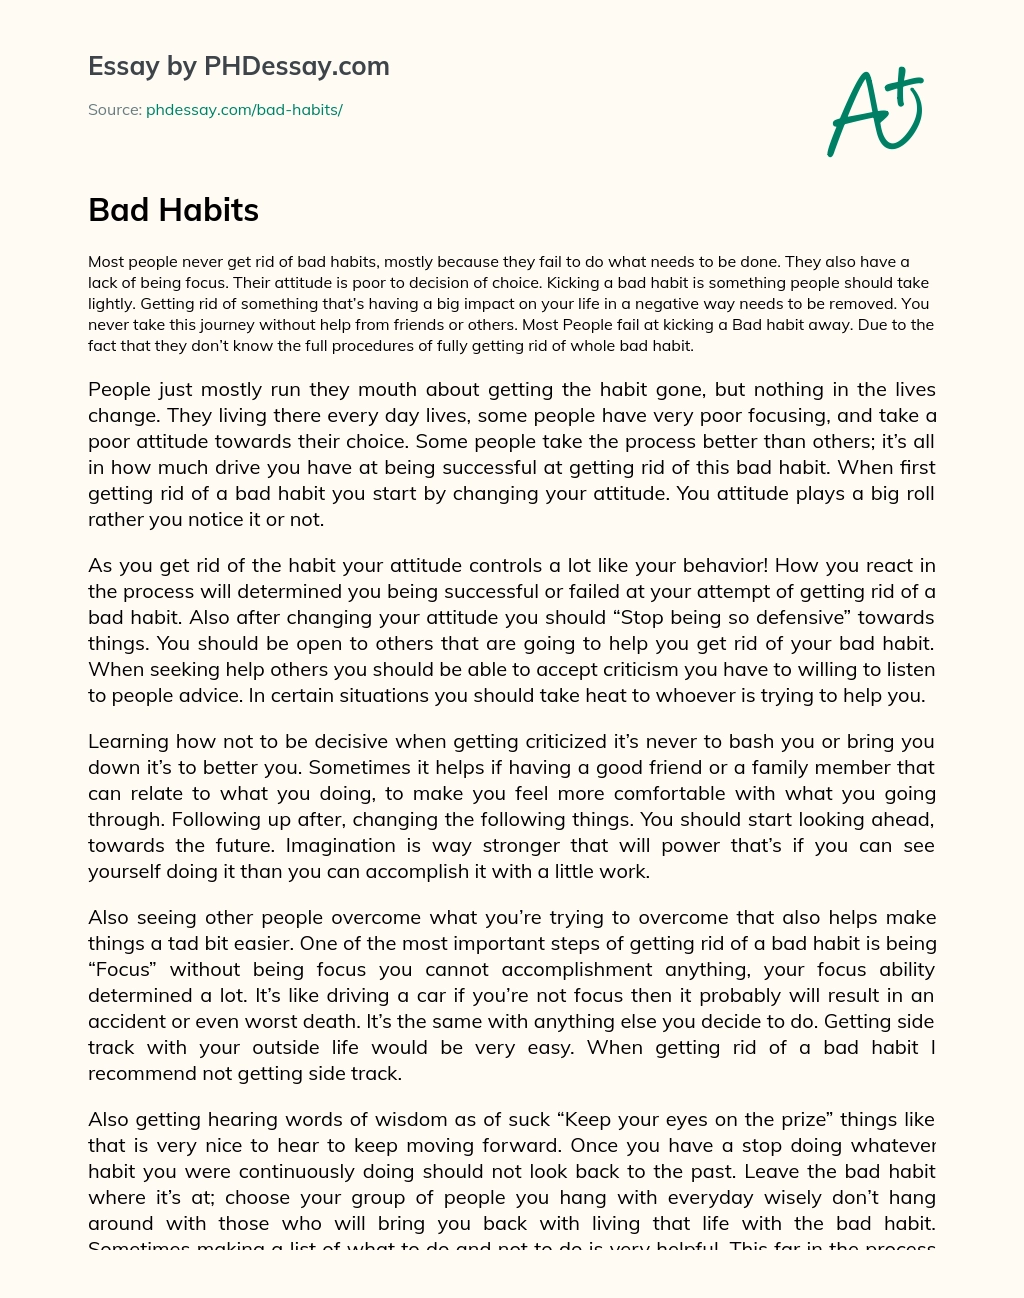 bad health habits essay